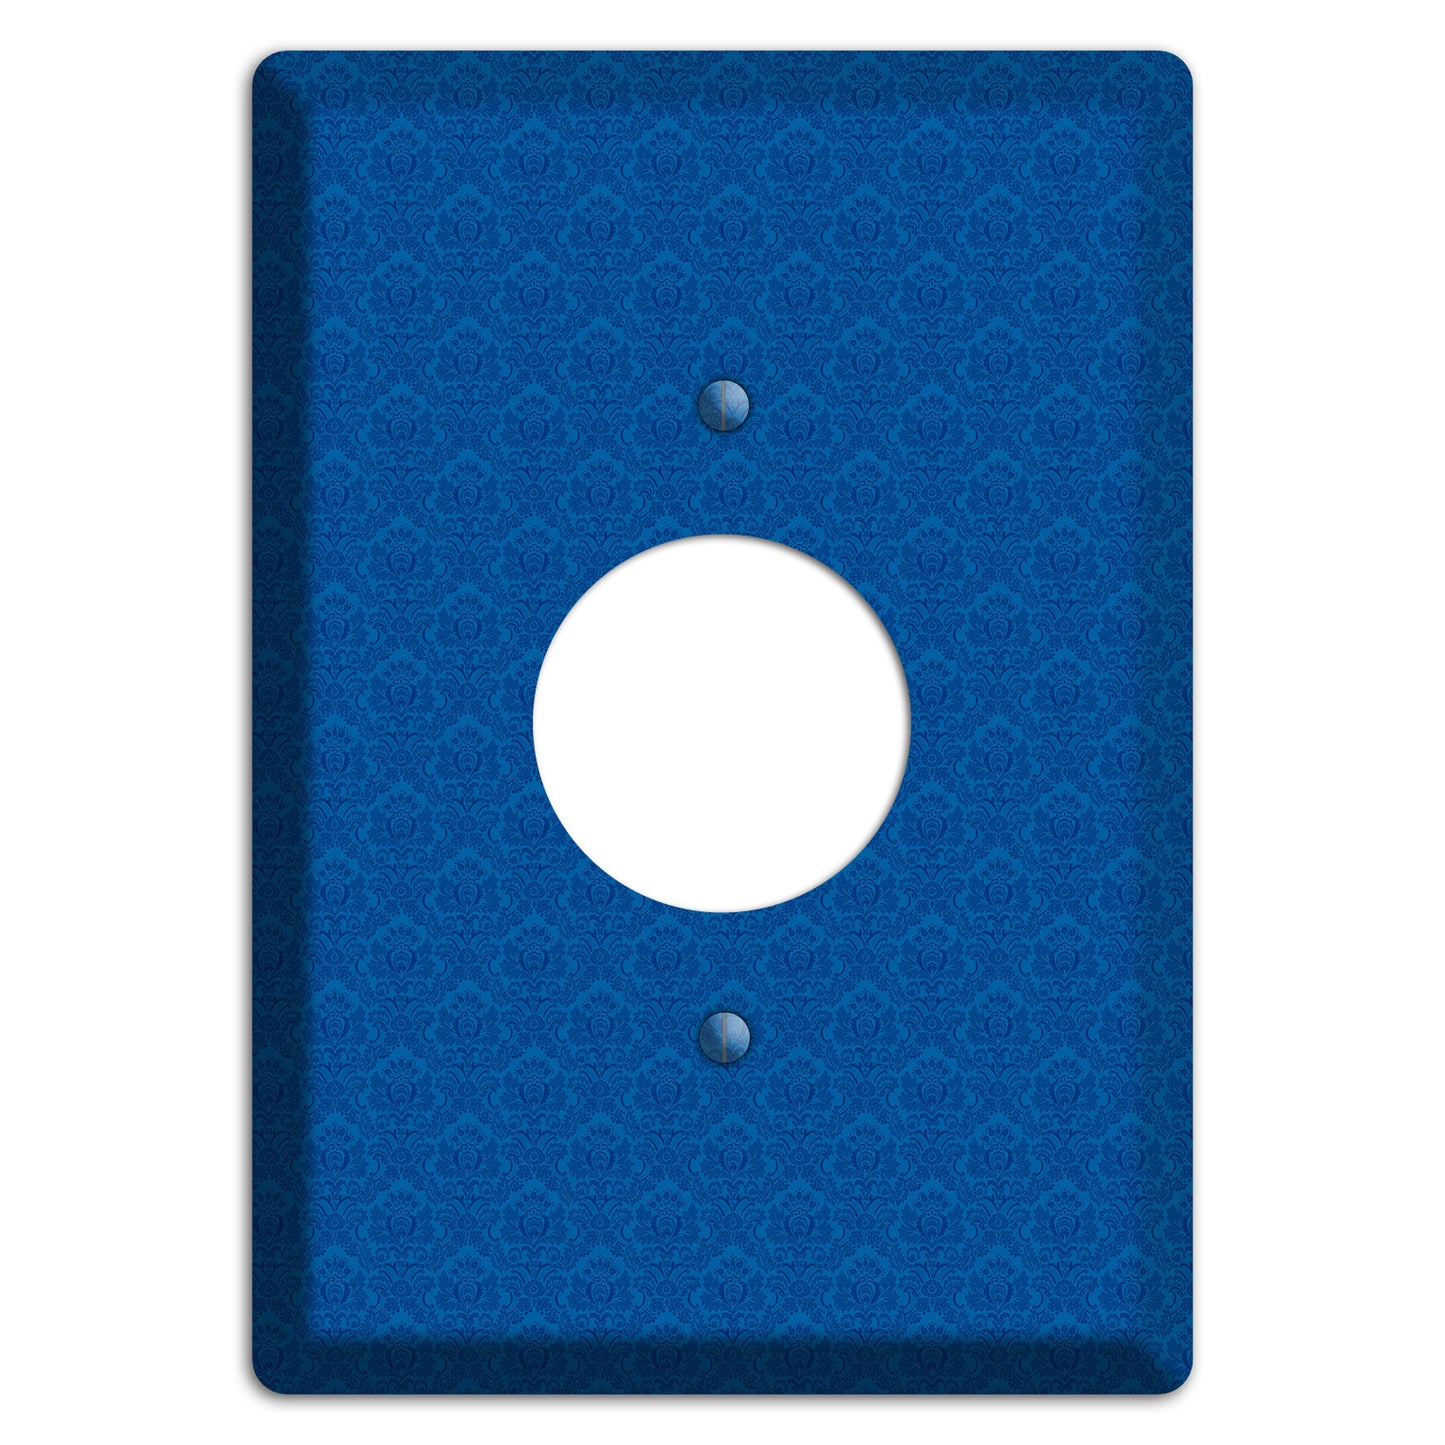 Blue Cartouche Single Receptacle Wallplate